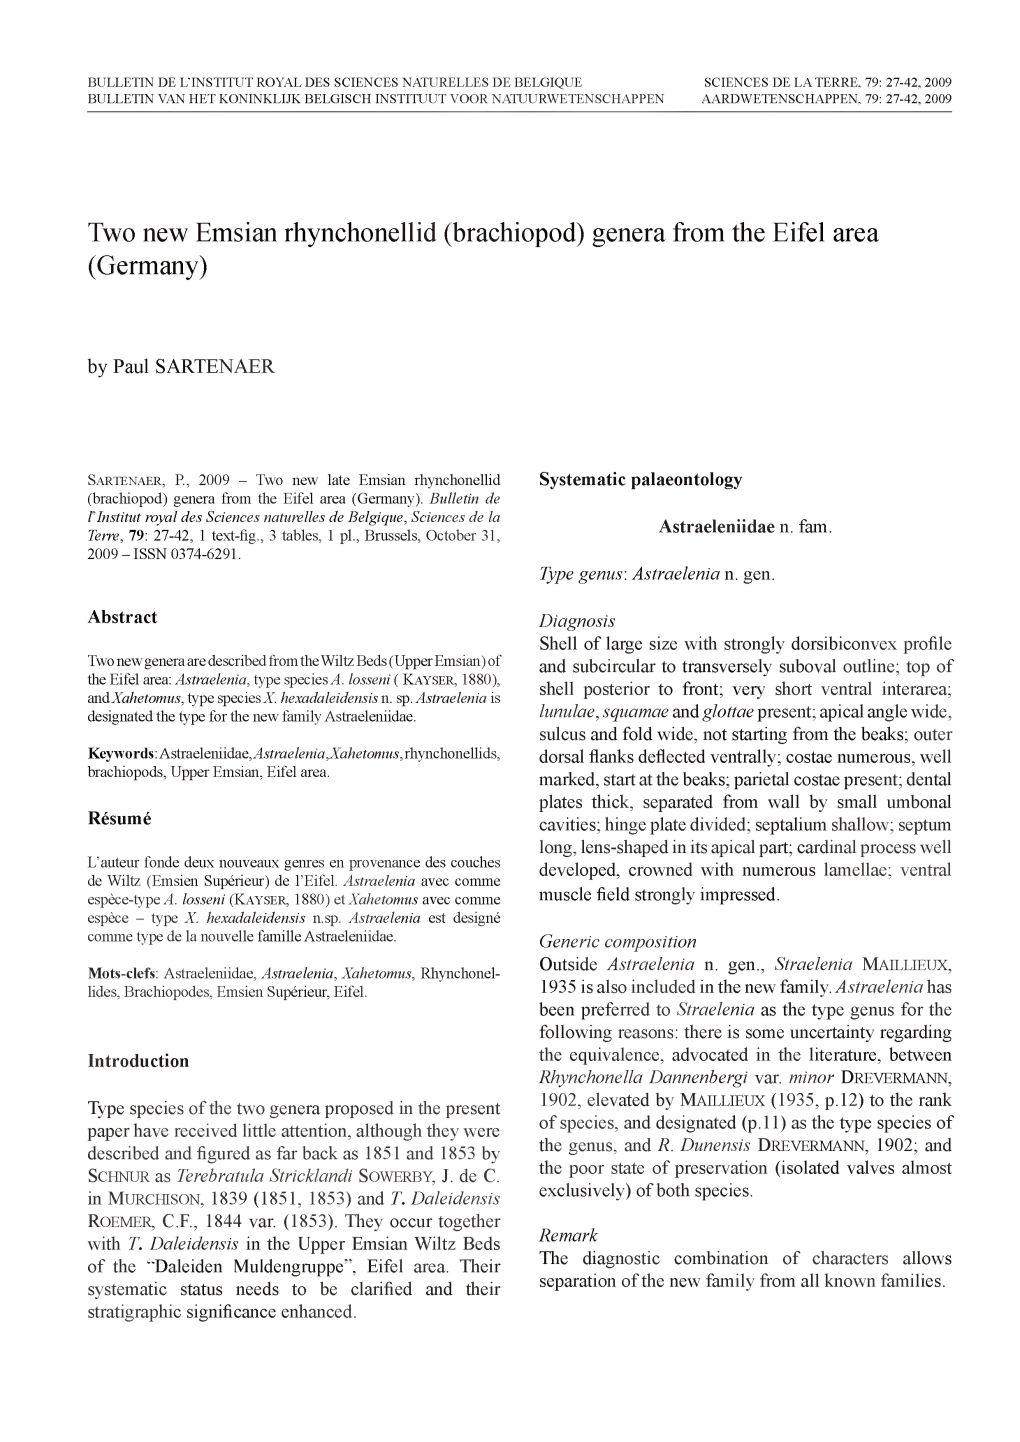 Two New Emsian Rhynchonellid (Brachiopod) Genera from the Eifel Area (Germany)